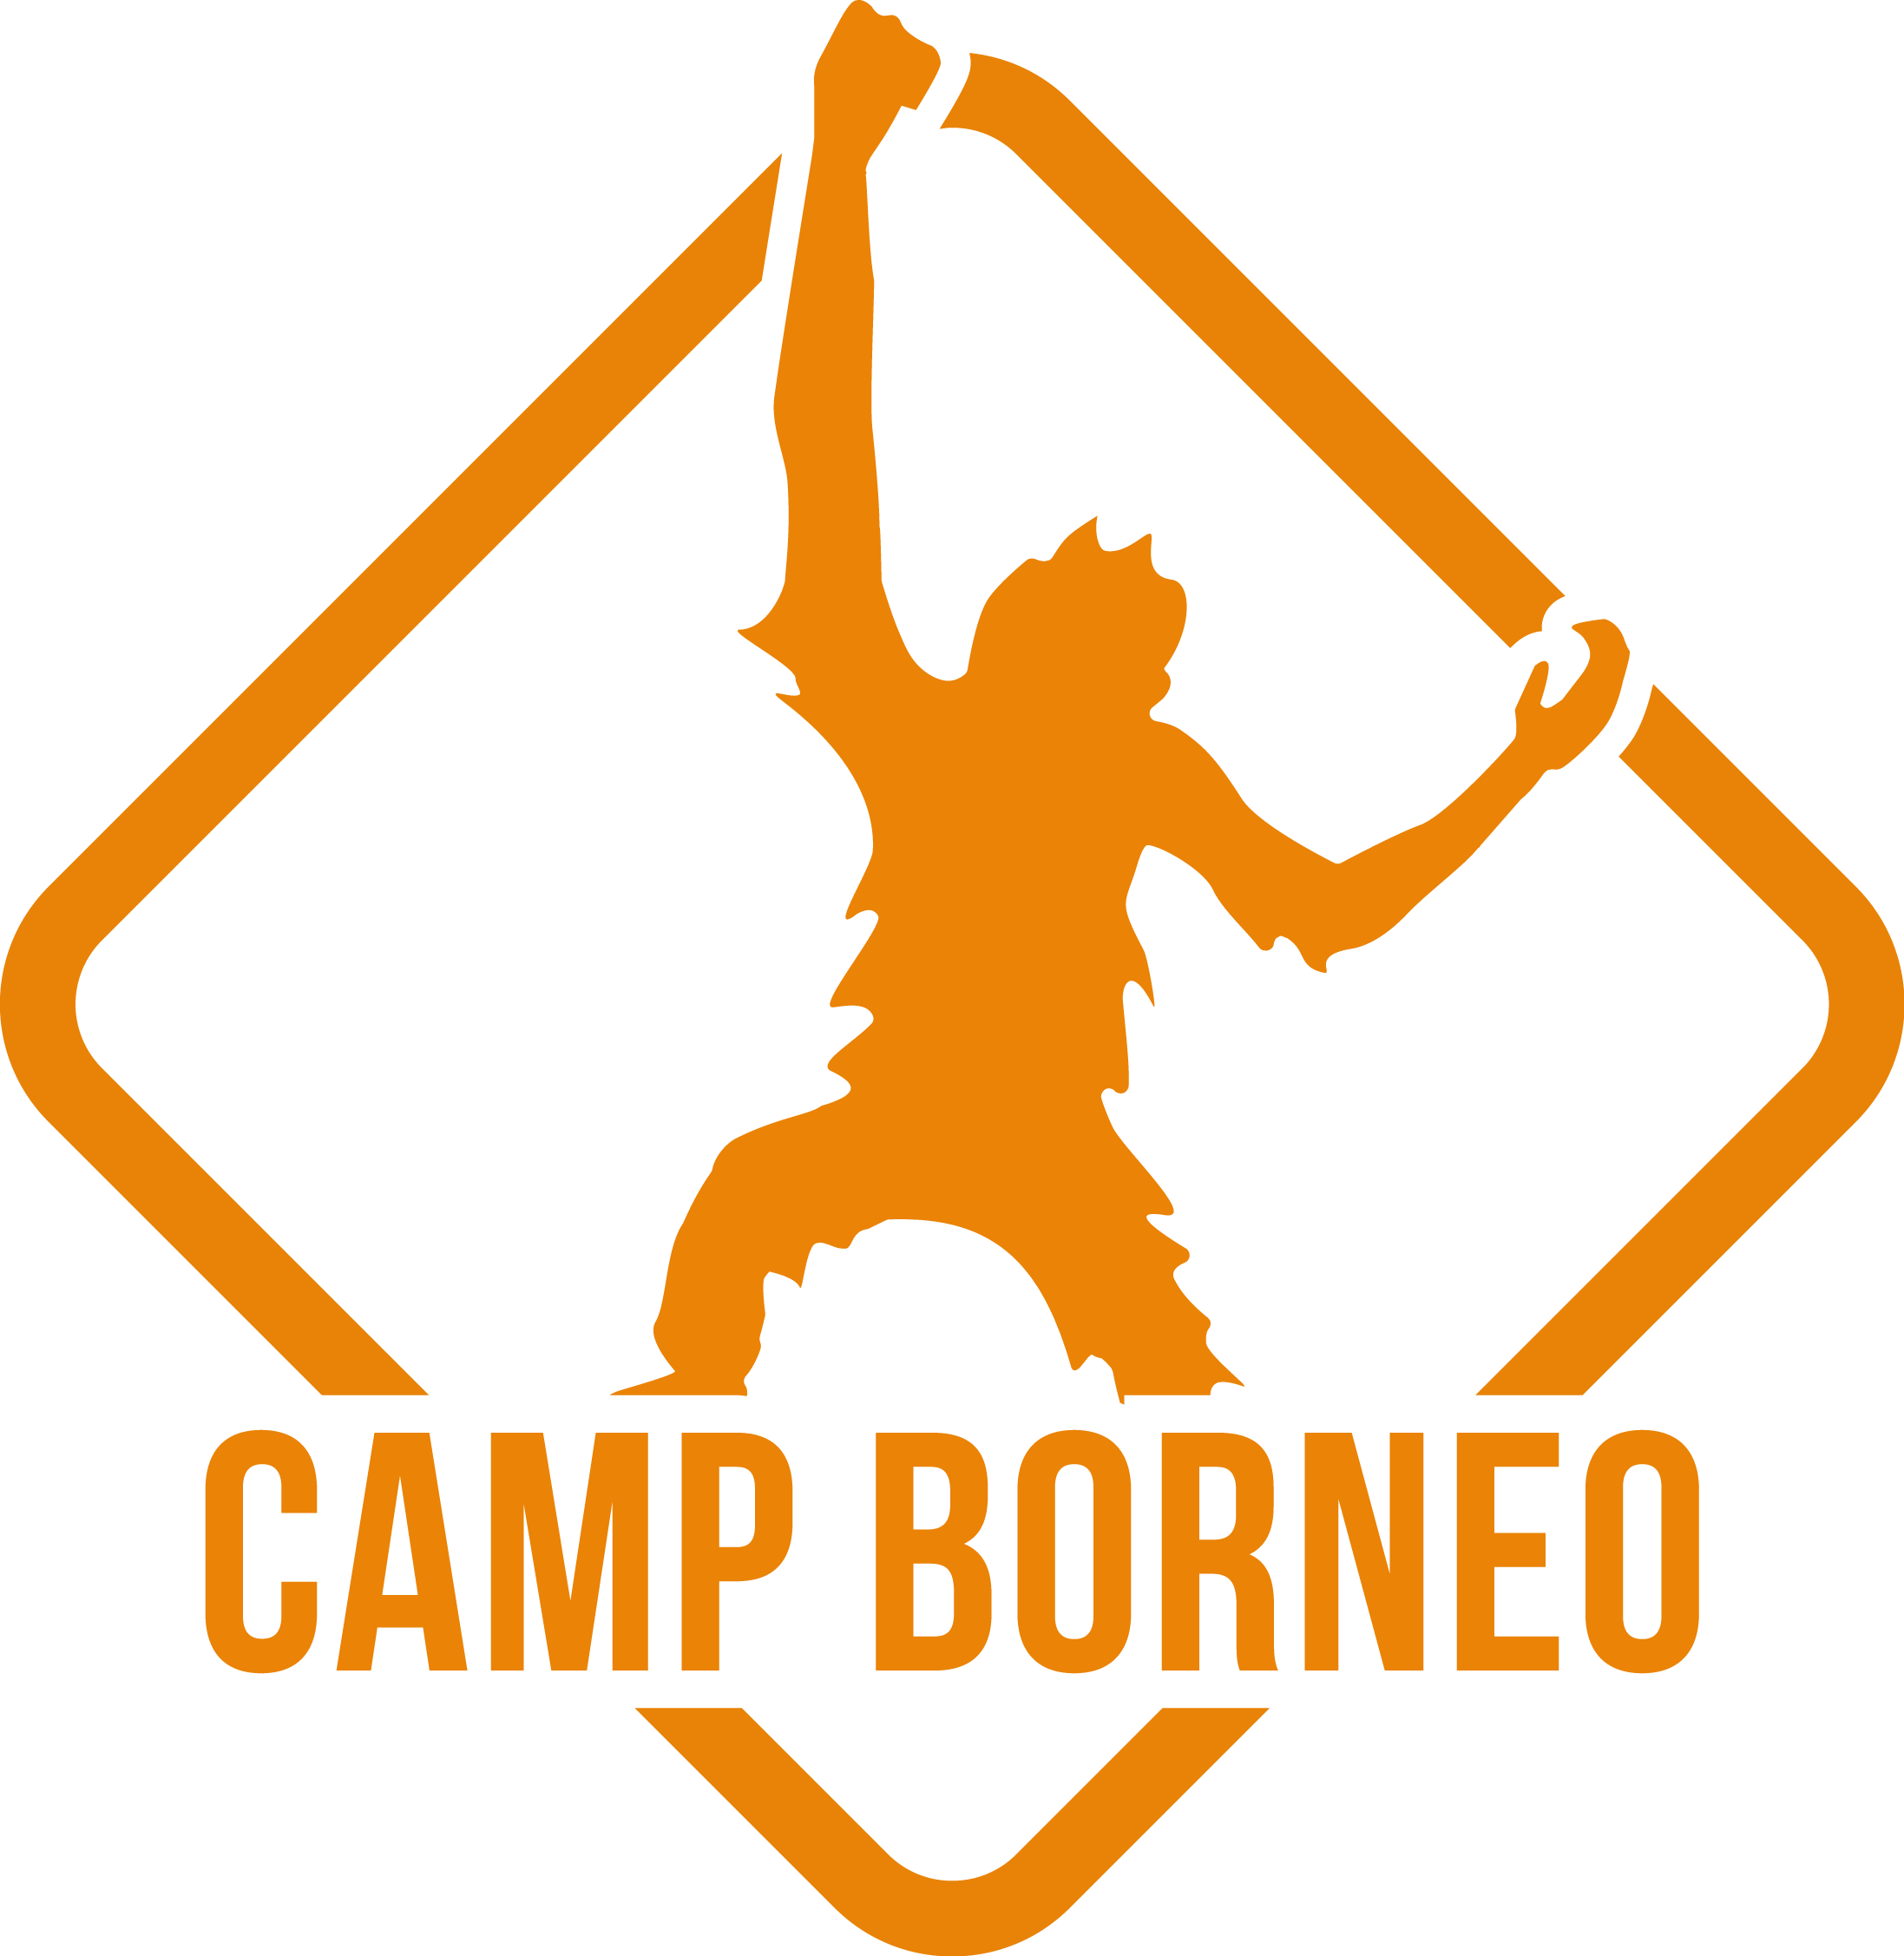 Camp Borneo Logo - Camps International Borneo (2194x2254)